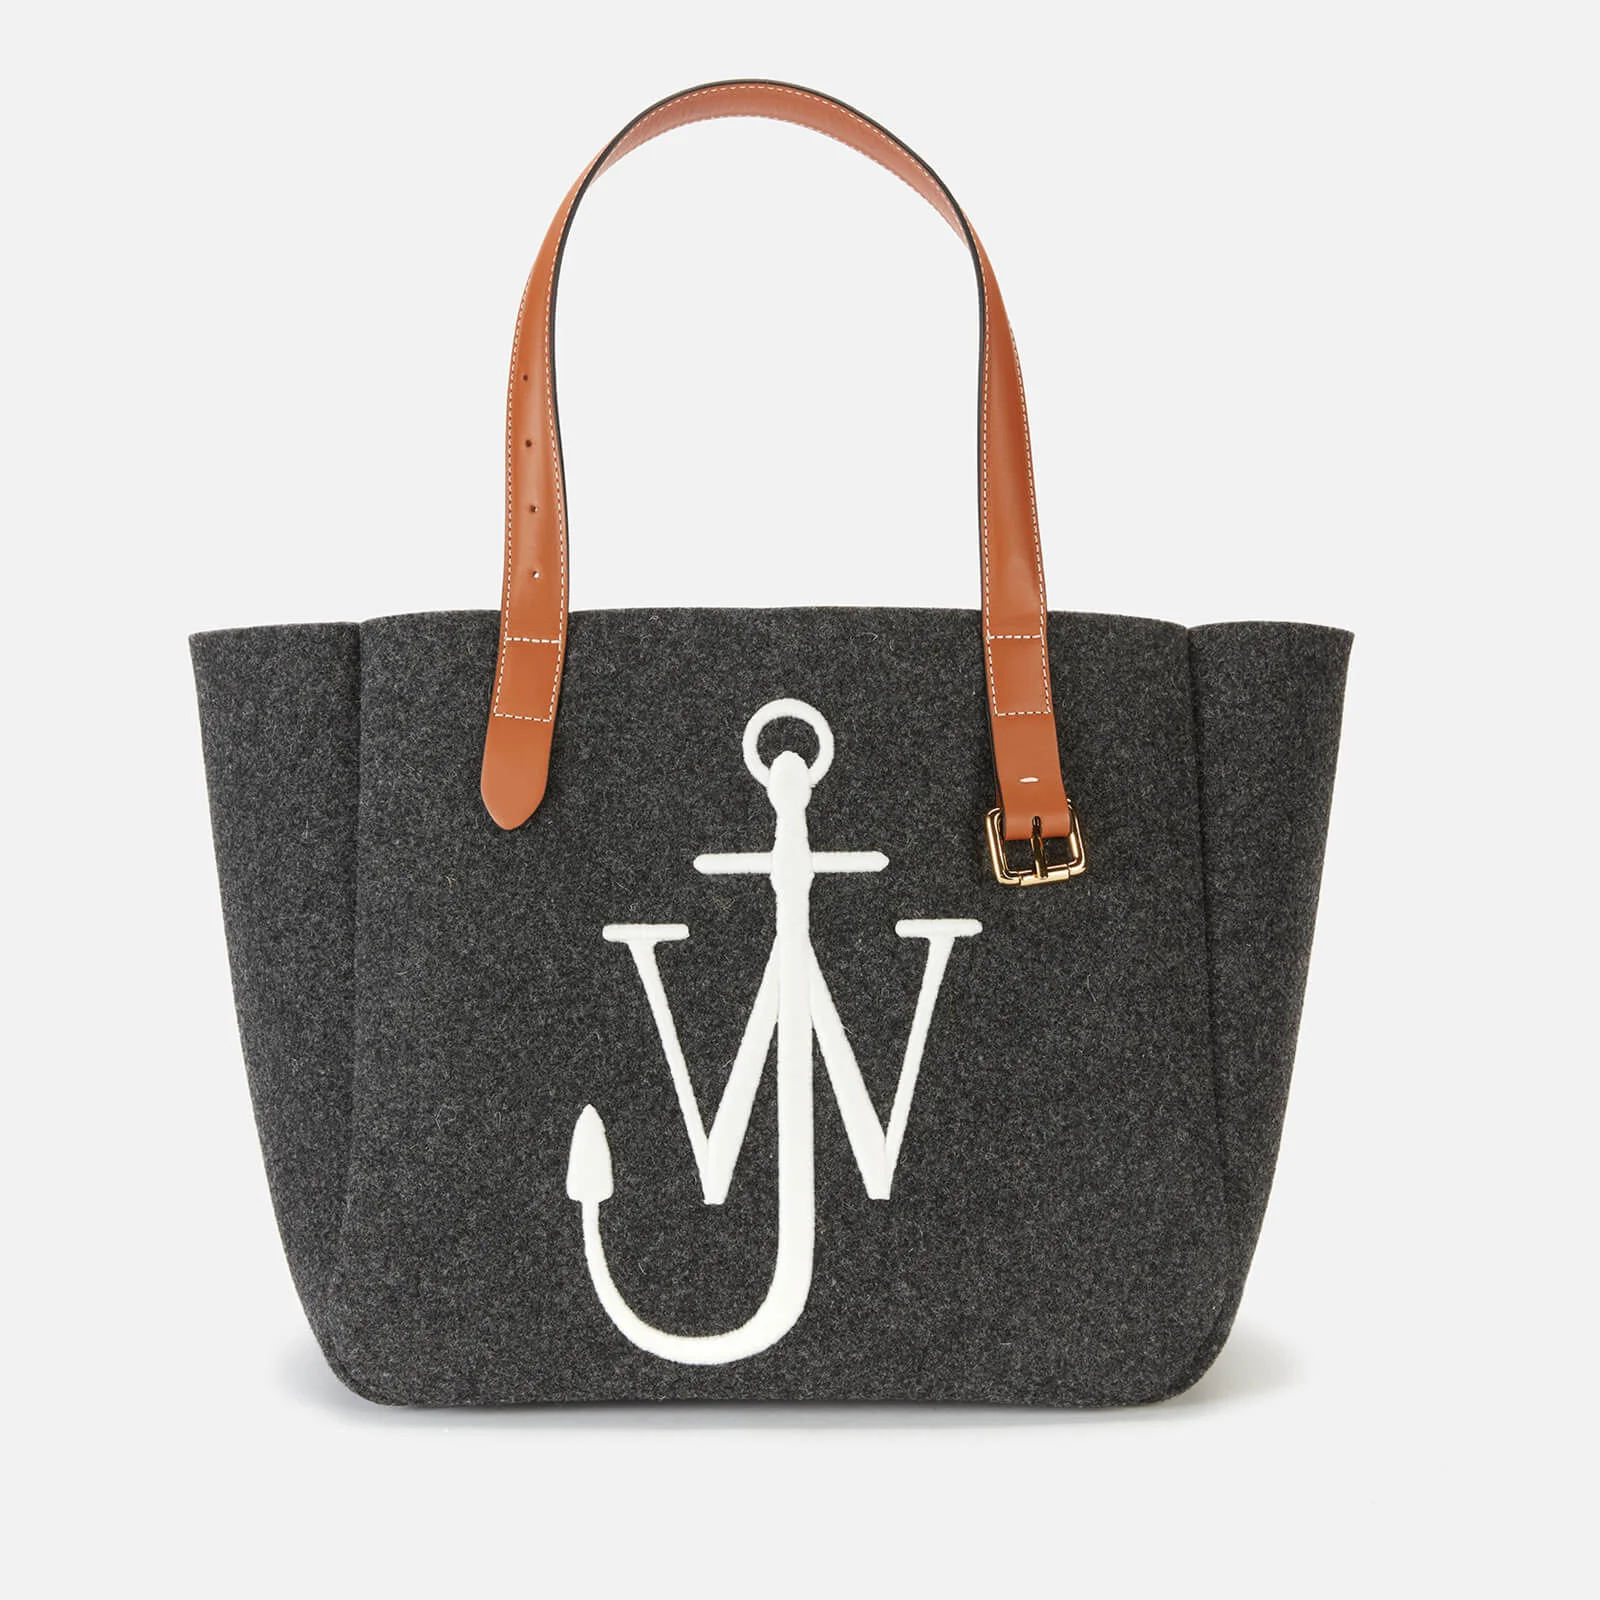 JW Anderson Women's Anchor Tote Bag - Dark Grey Melange Image 1